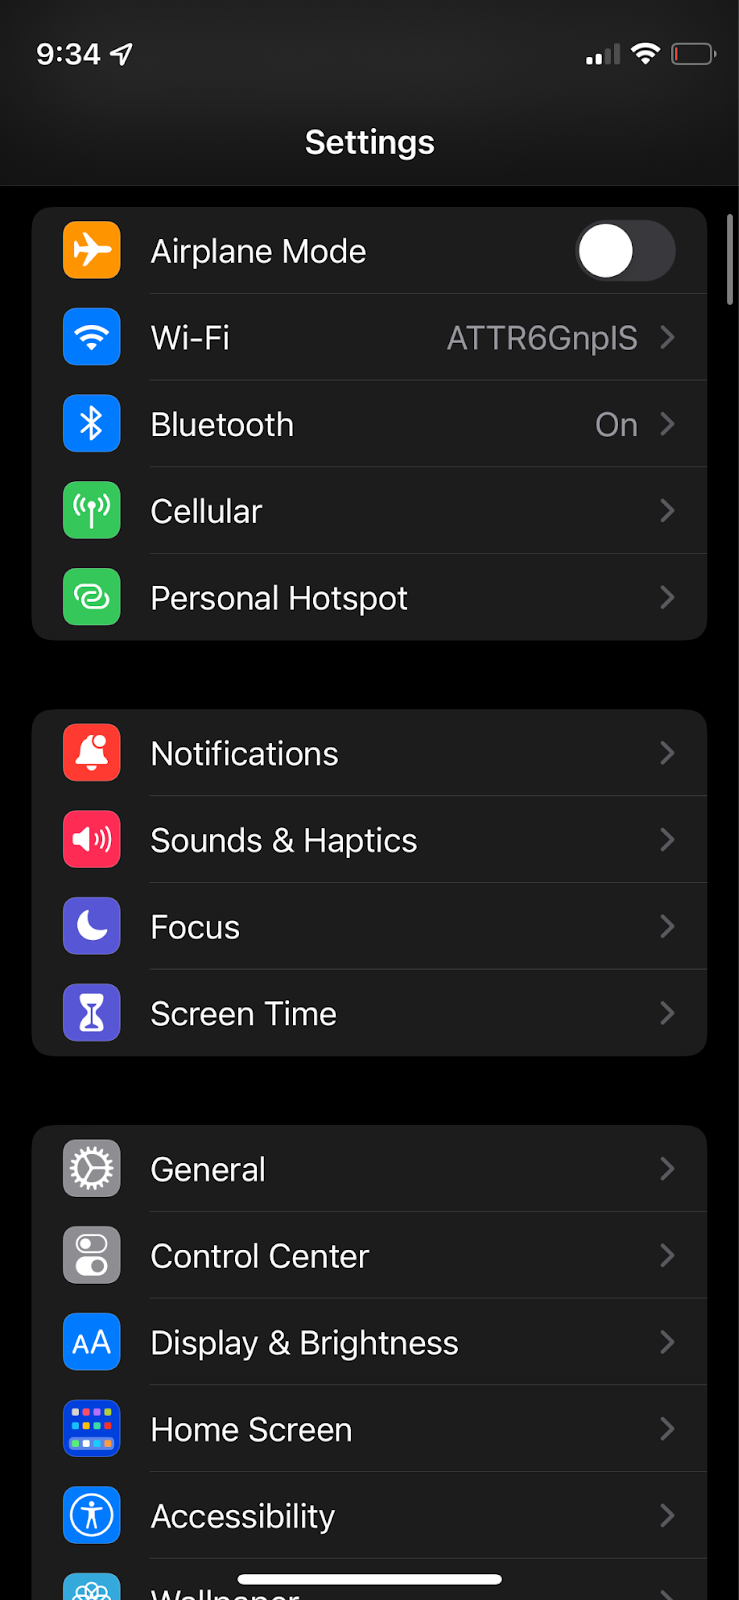 resetting iPhone network settings